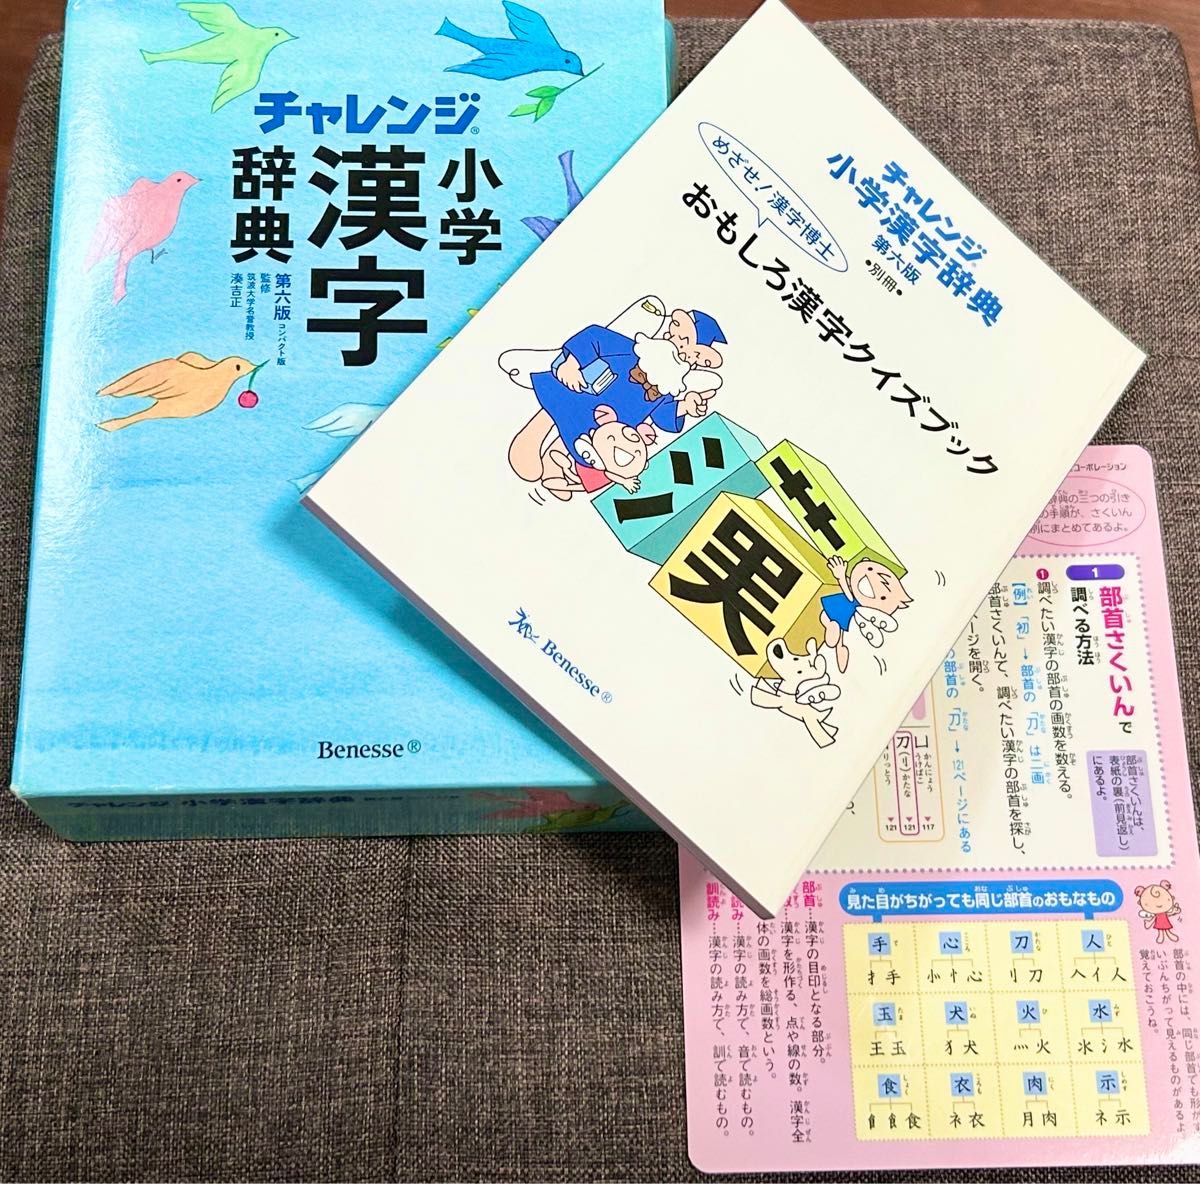 【Benesse】チャレンジ小学漢字辞典 コンパクト版